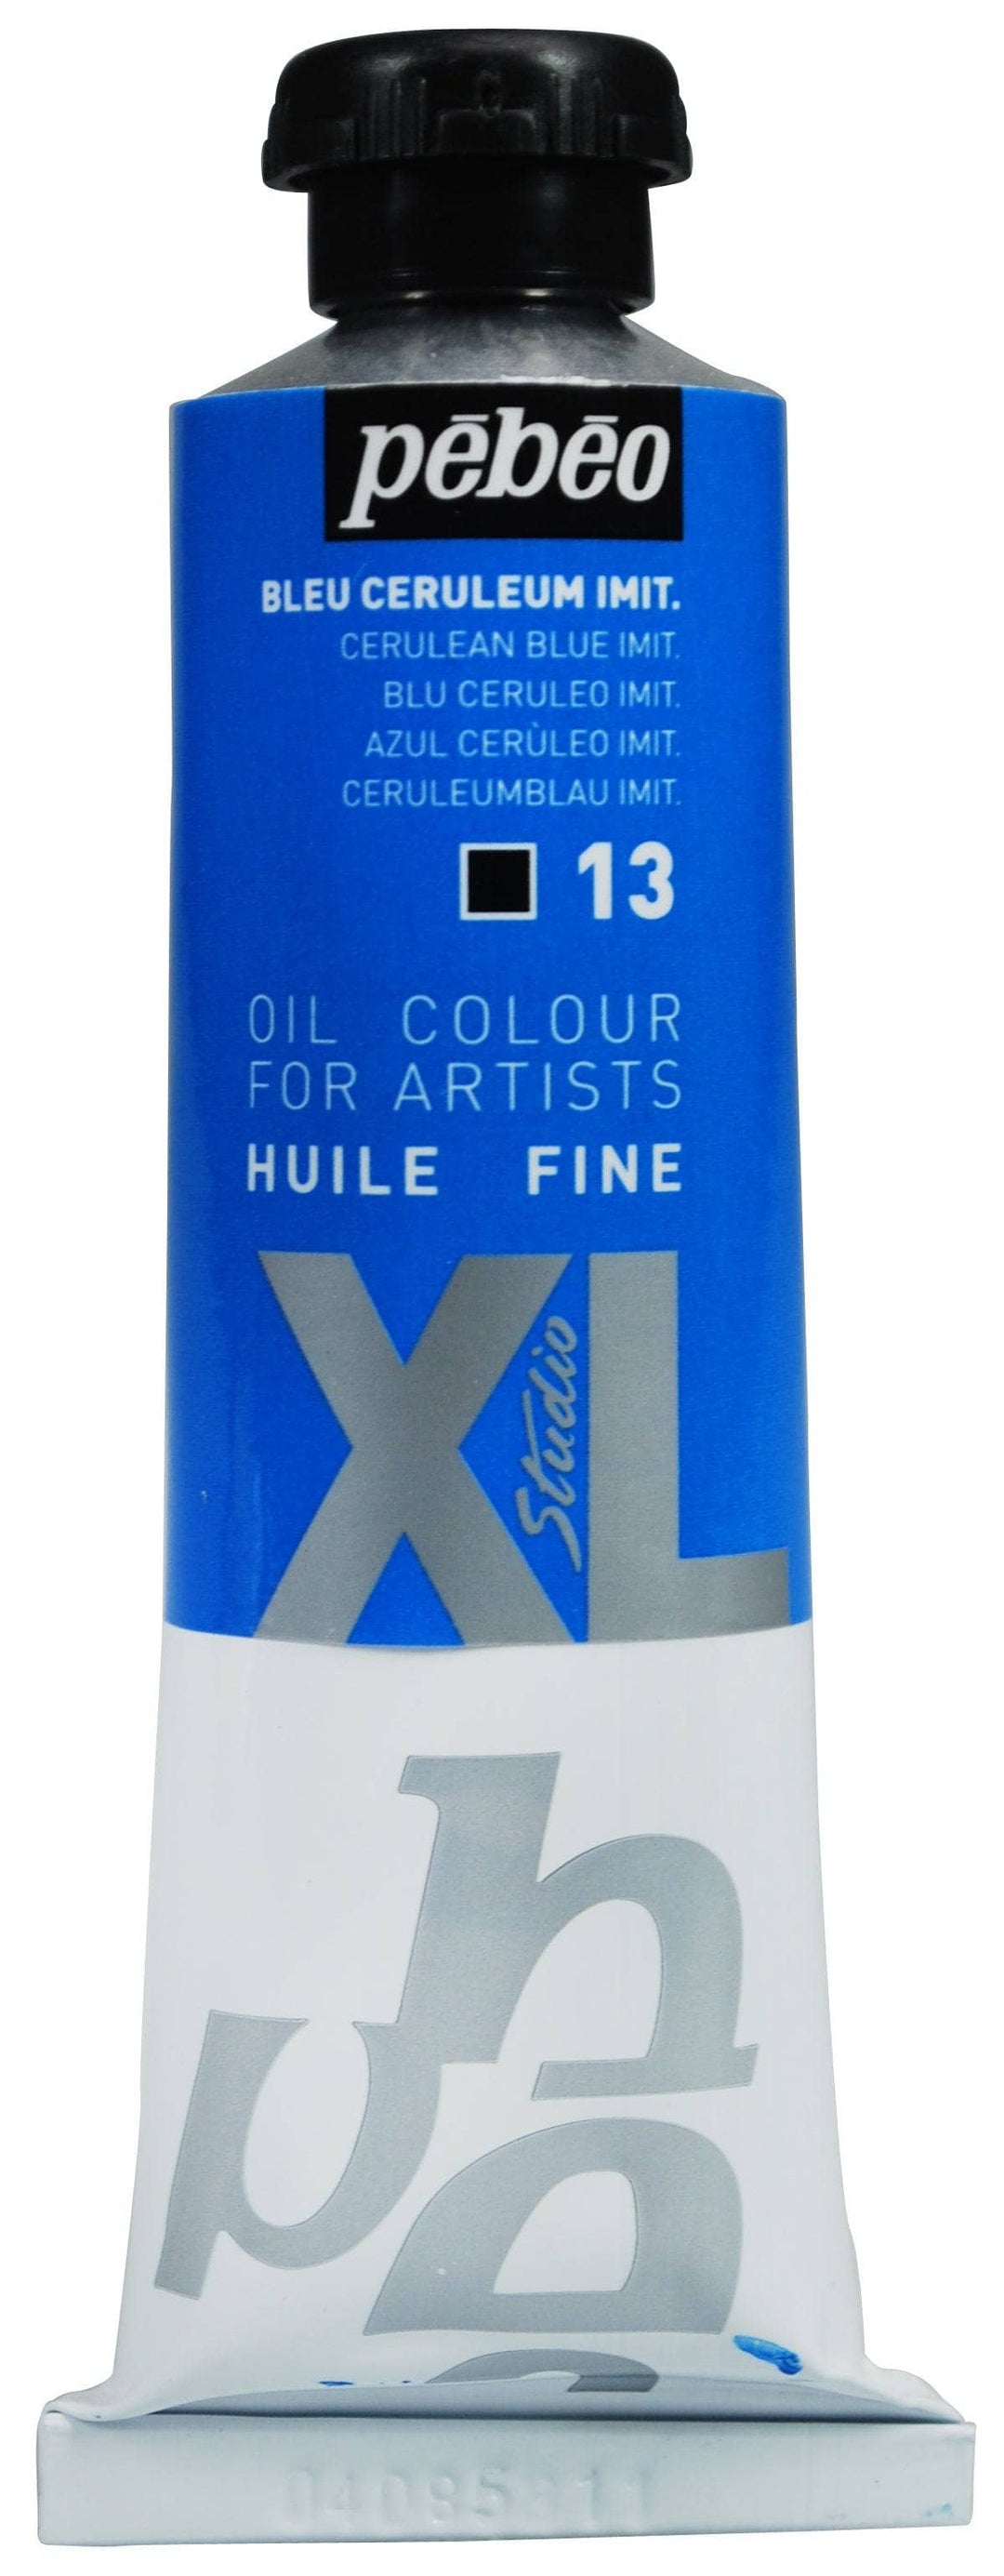 Huile fine Studio XL 37ml - Bleu Ceruleum Imit.
PB937013